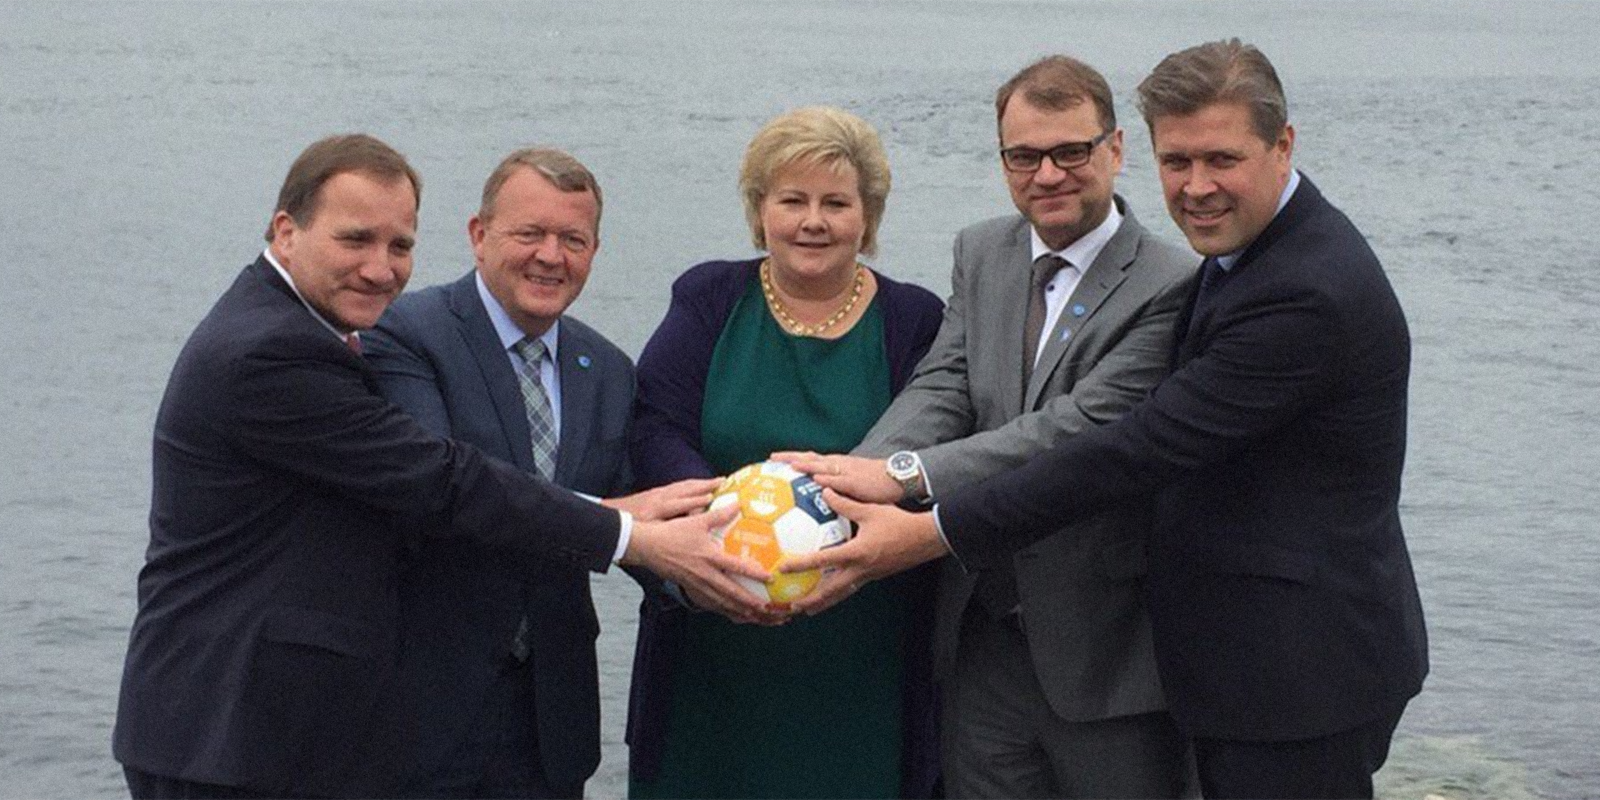 Nordic leaders mock Trumps orb photo